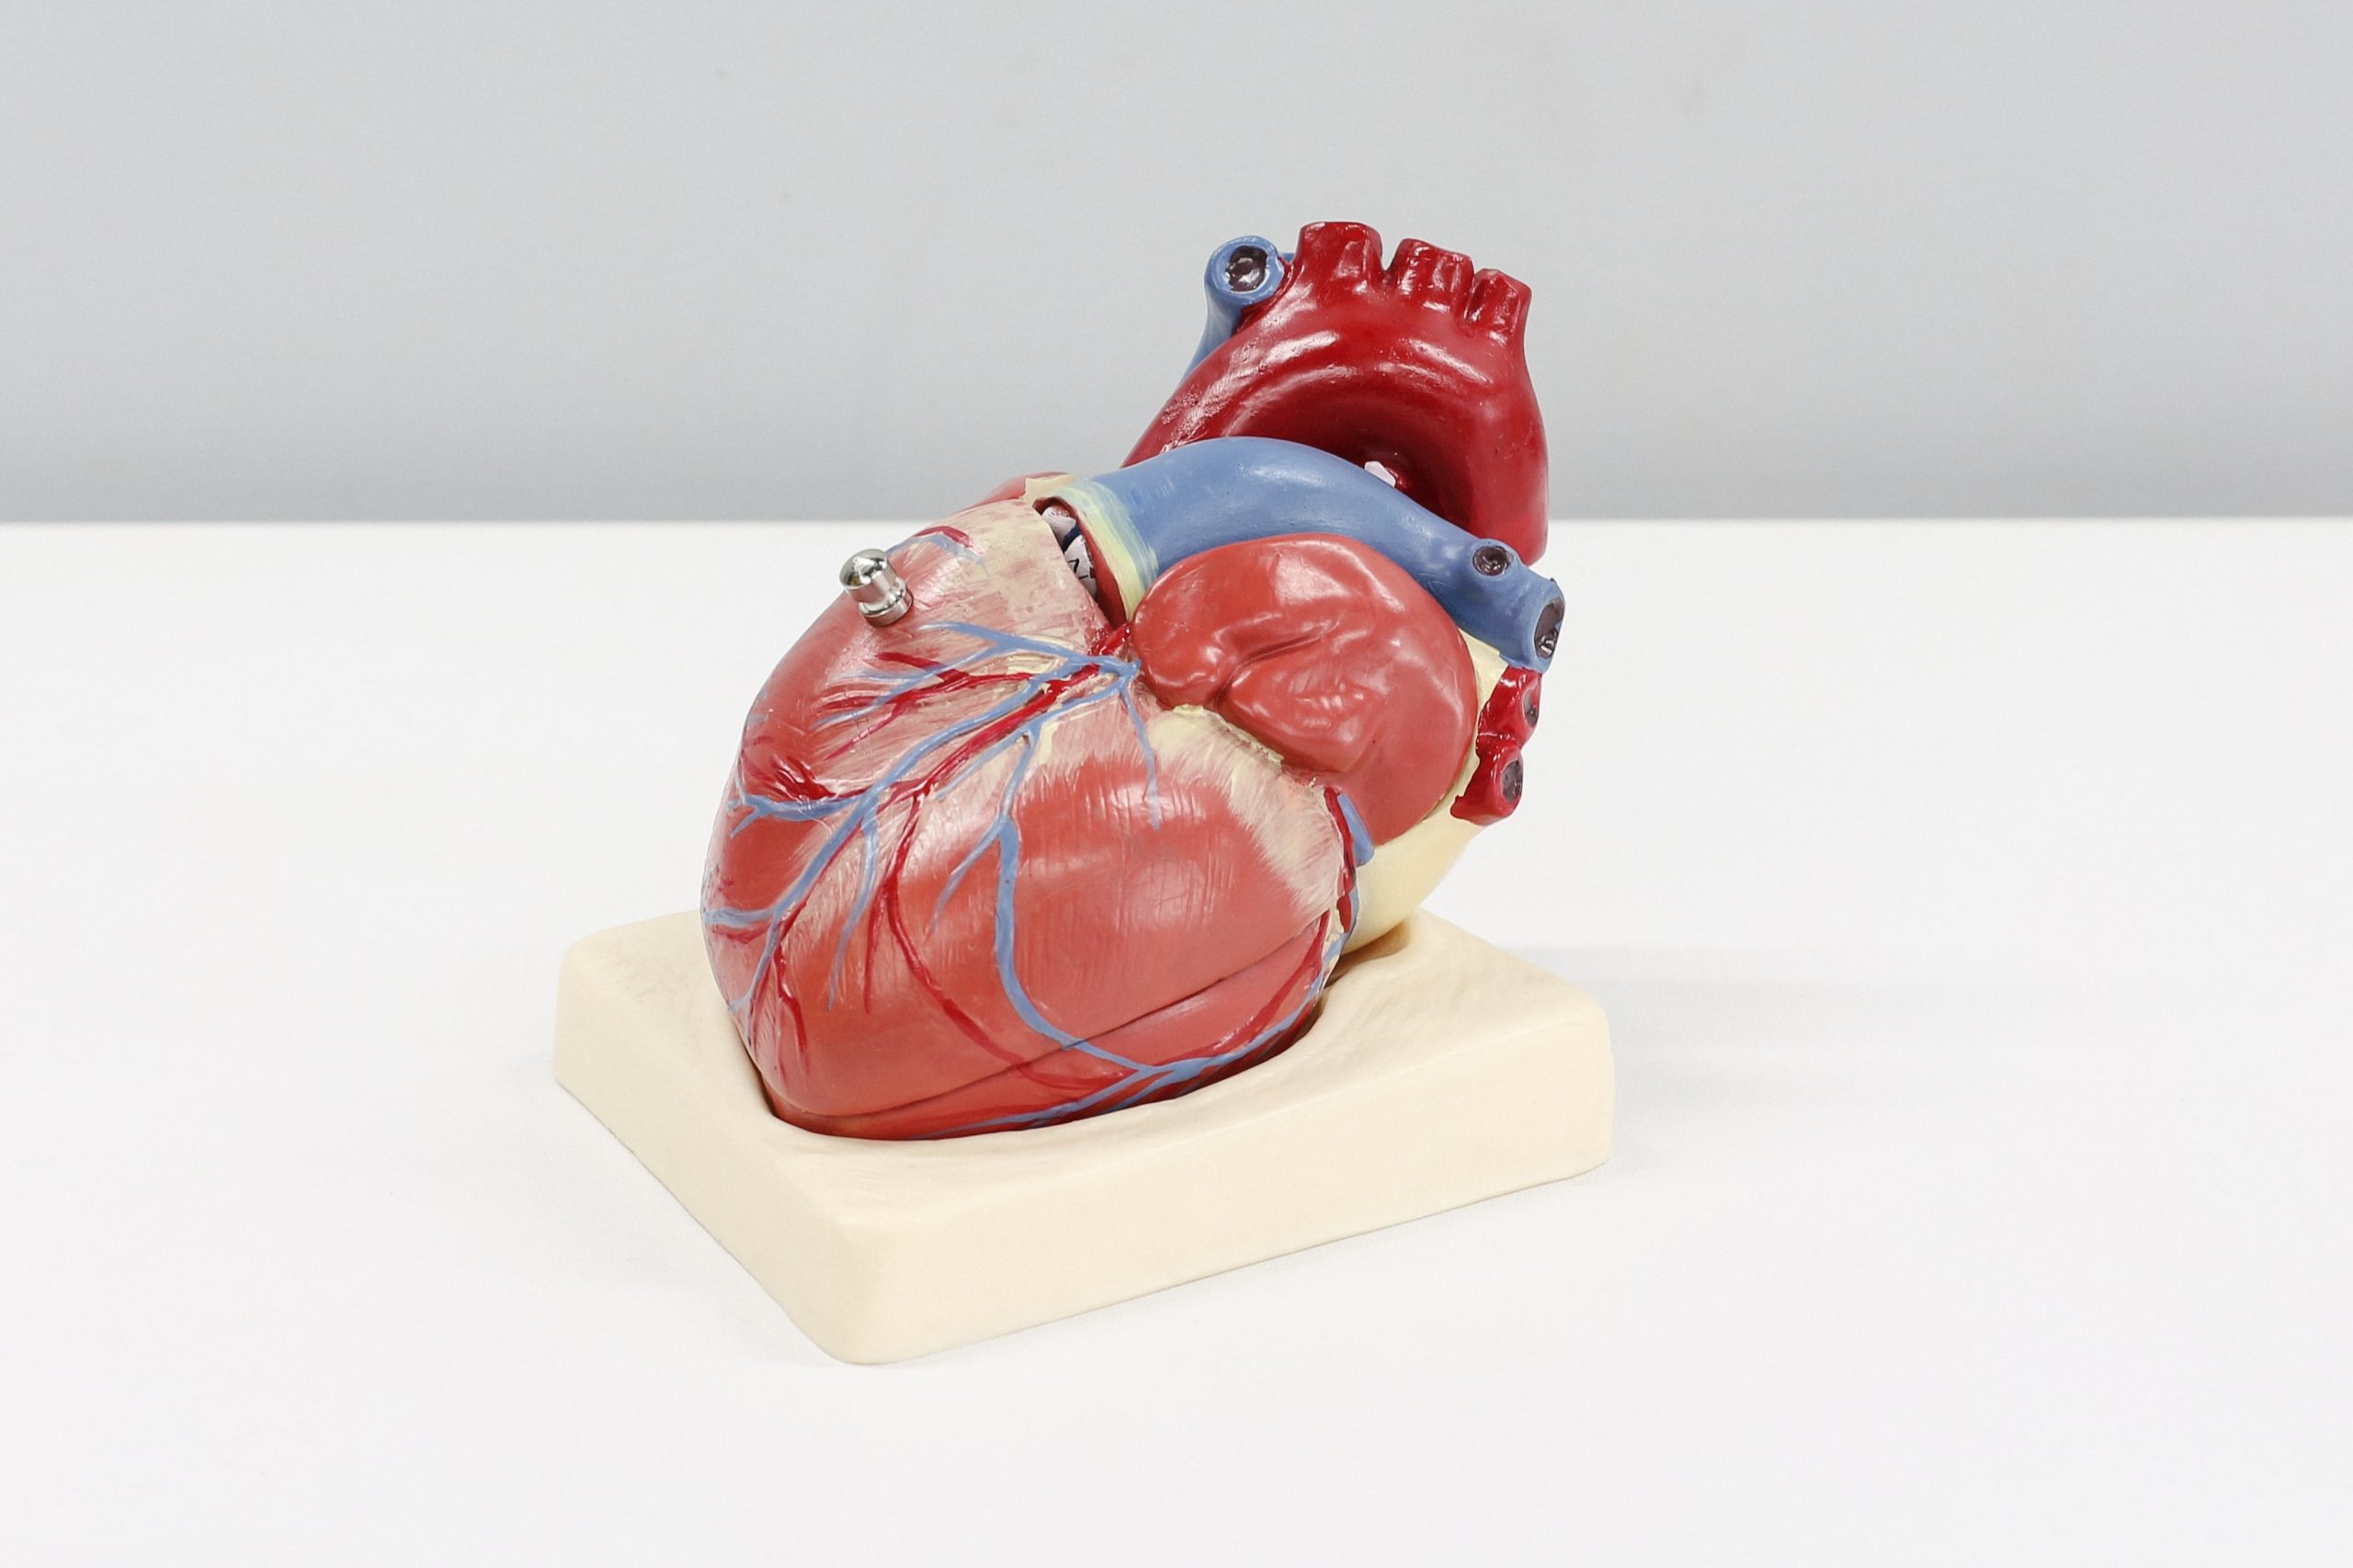 a model of a healthy human heart